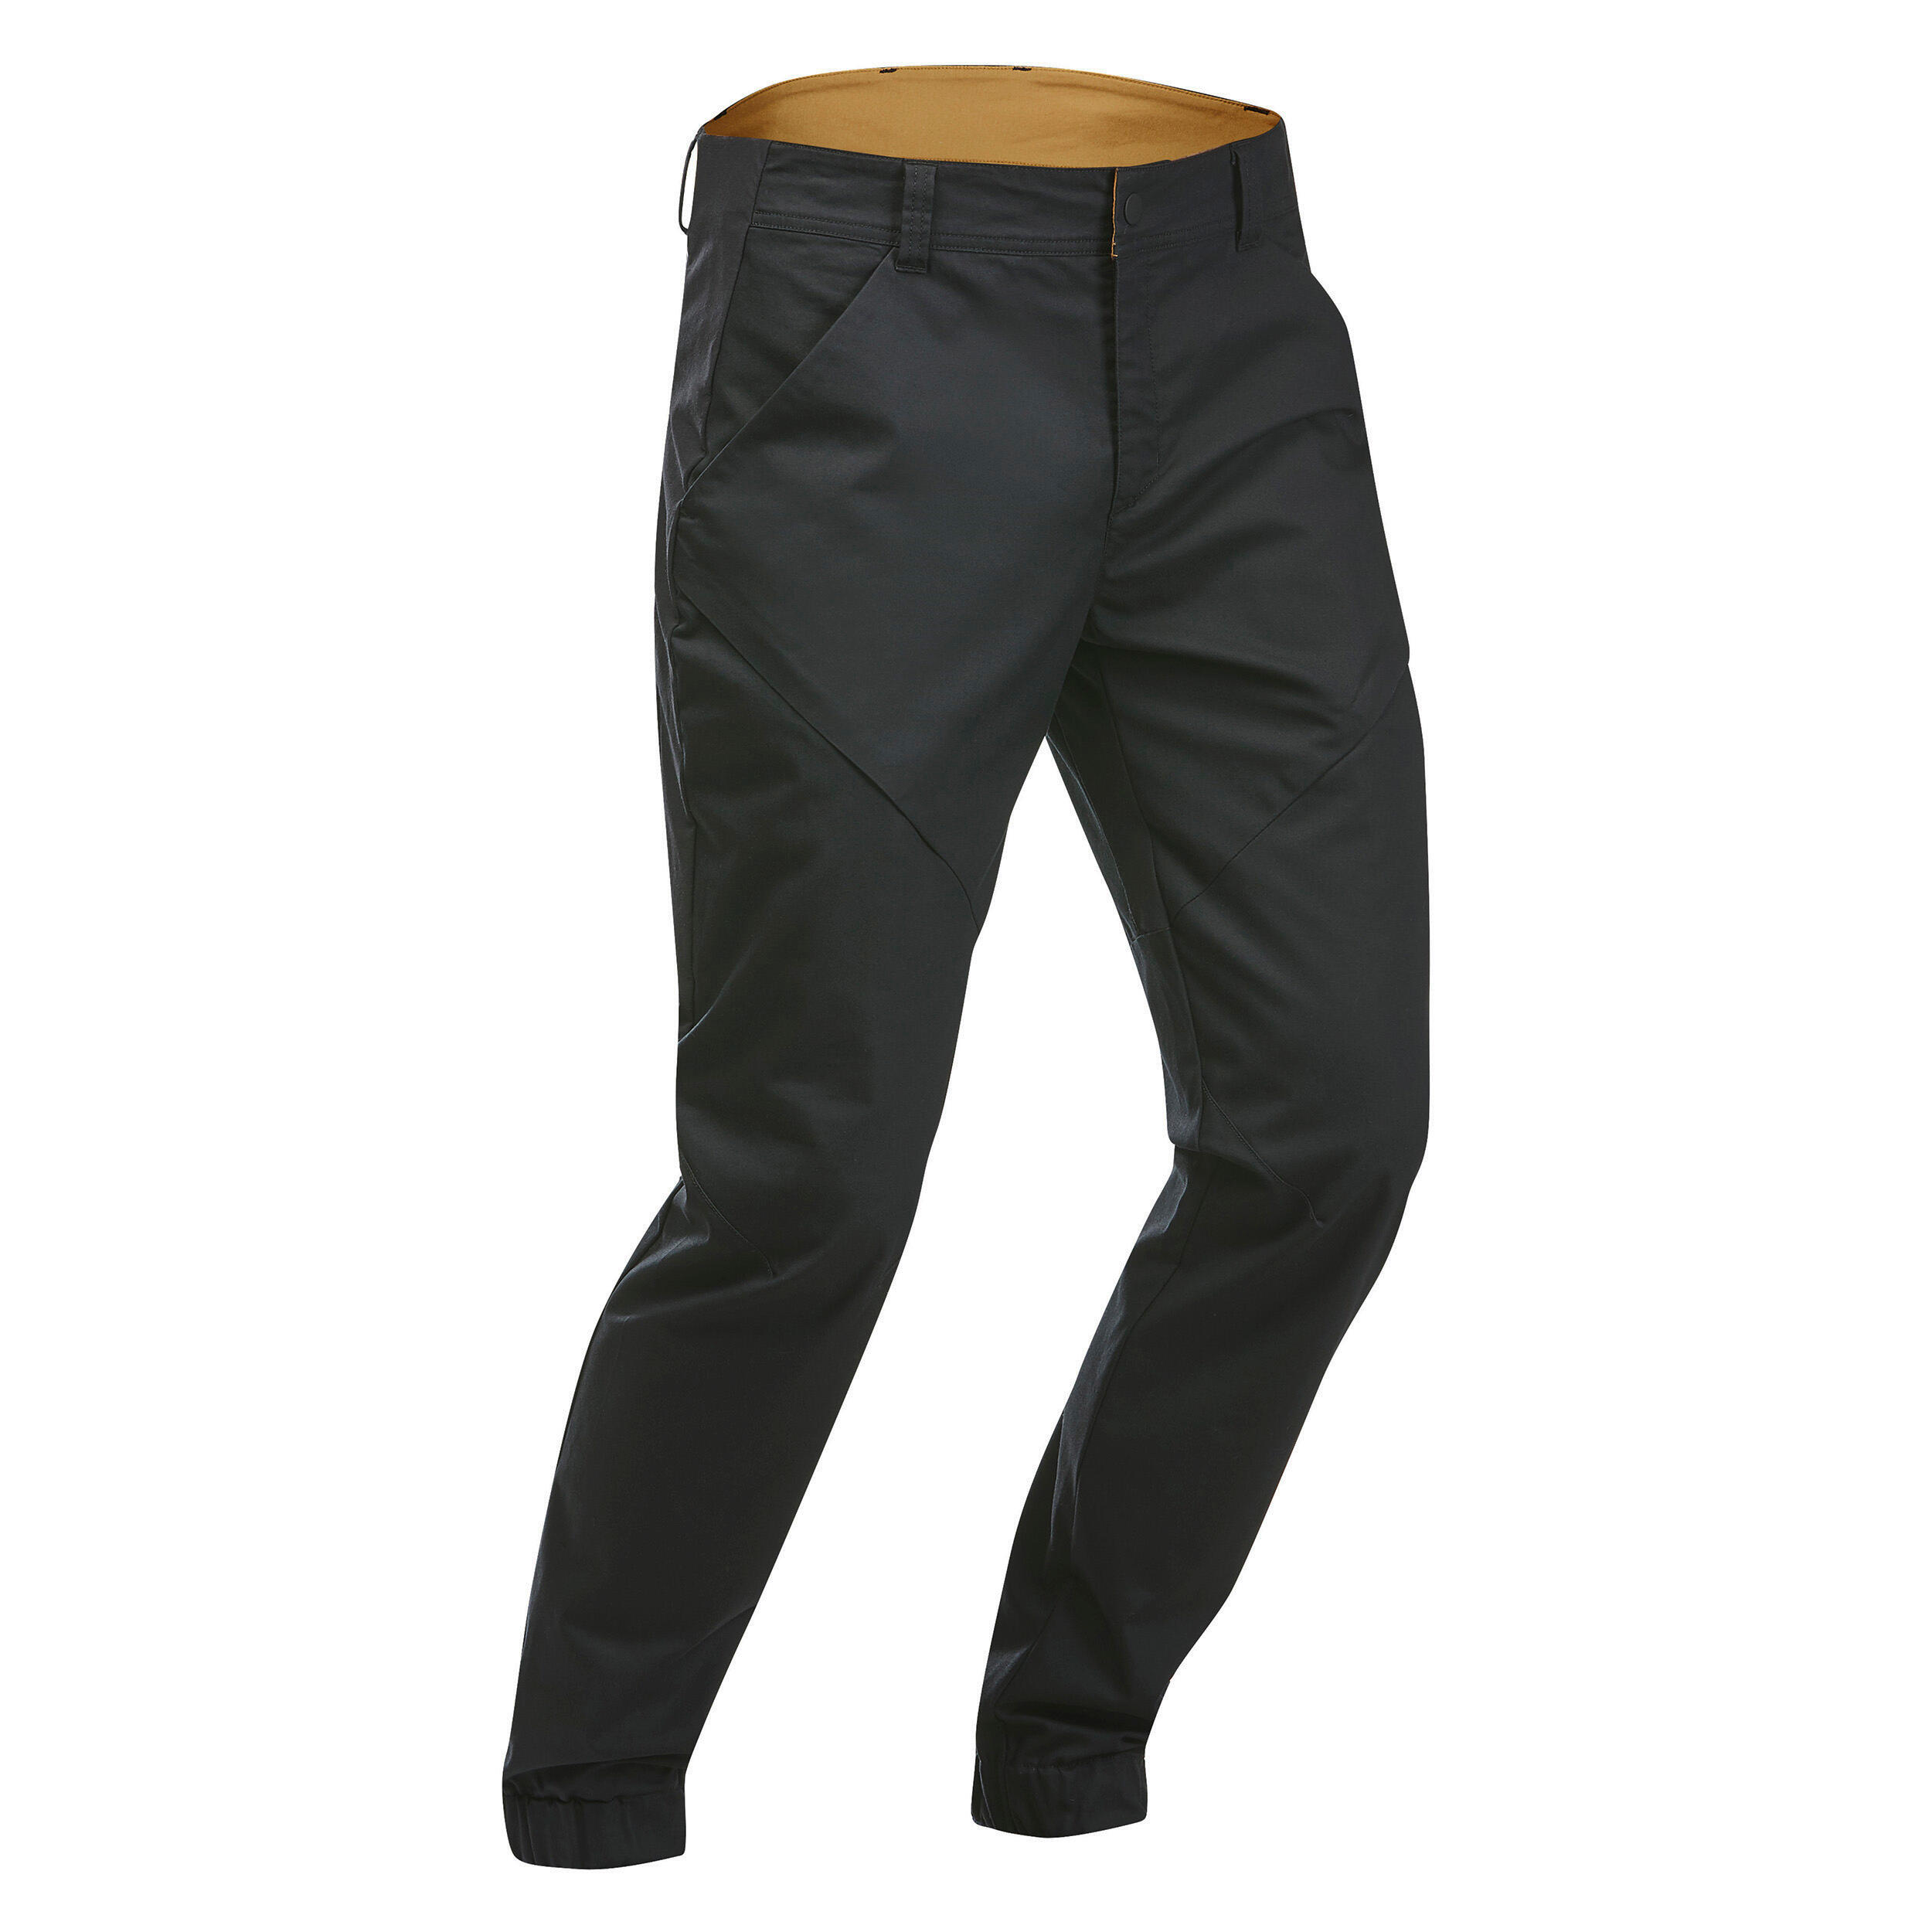 Buy PlaidPlain Mens Skinny Stretchy Khaki Pants Colored Pants Slim Fit  Slacks Tapered Trousers 819 Black 27X30 at Amazonin